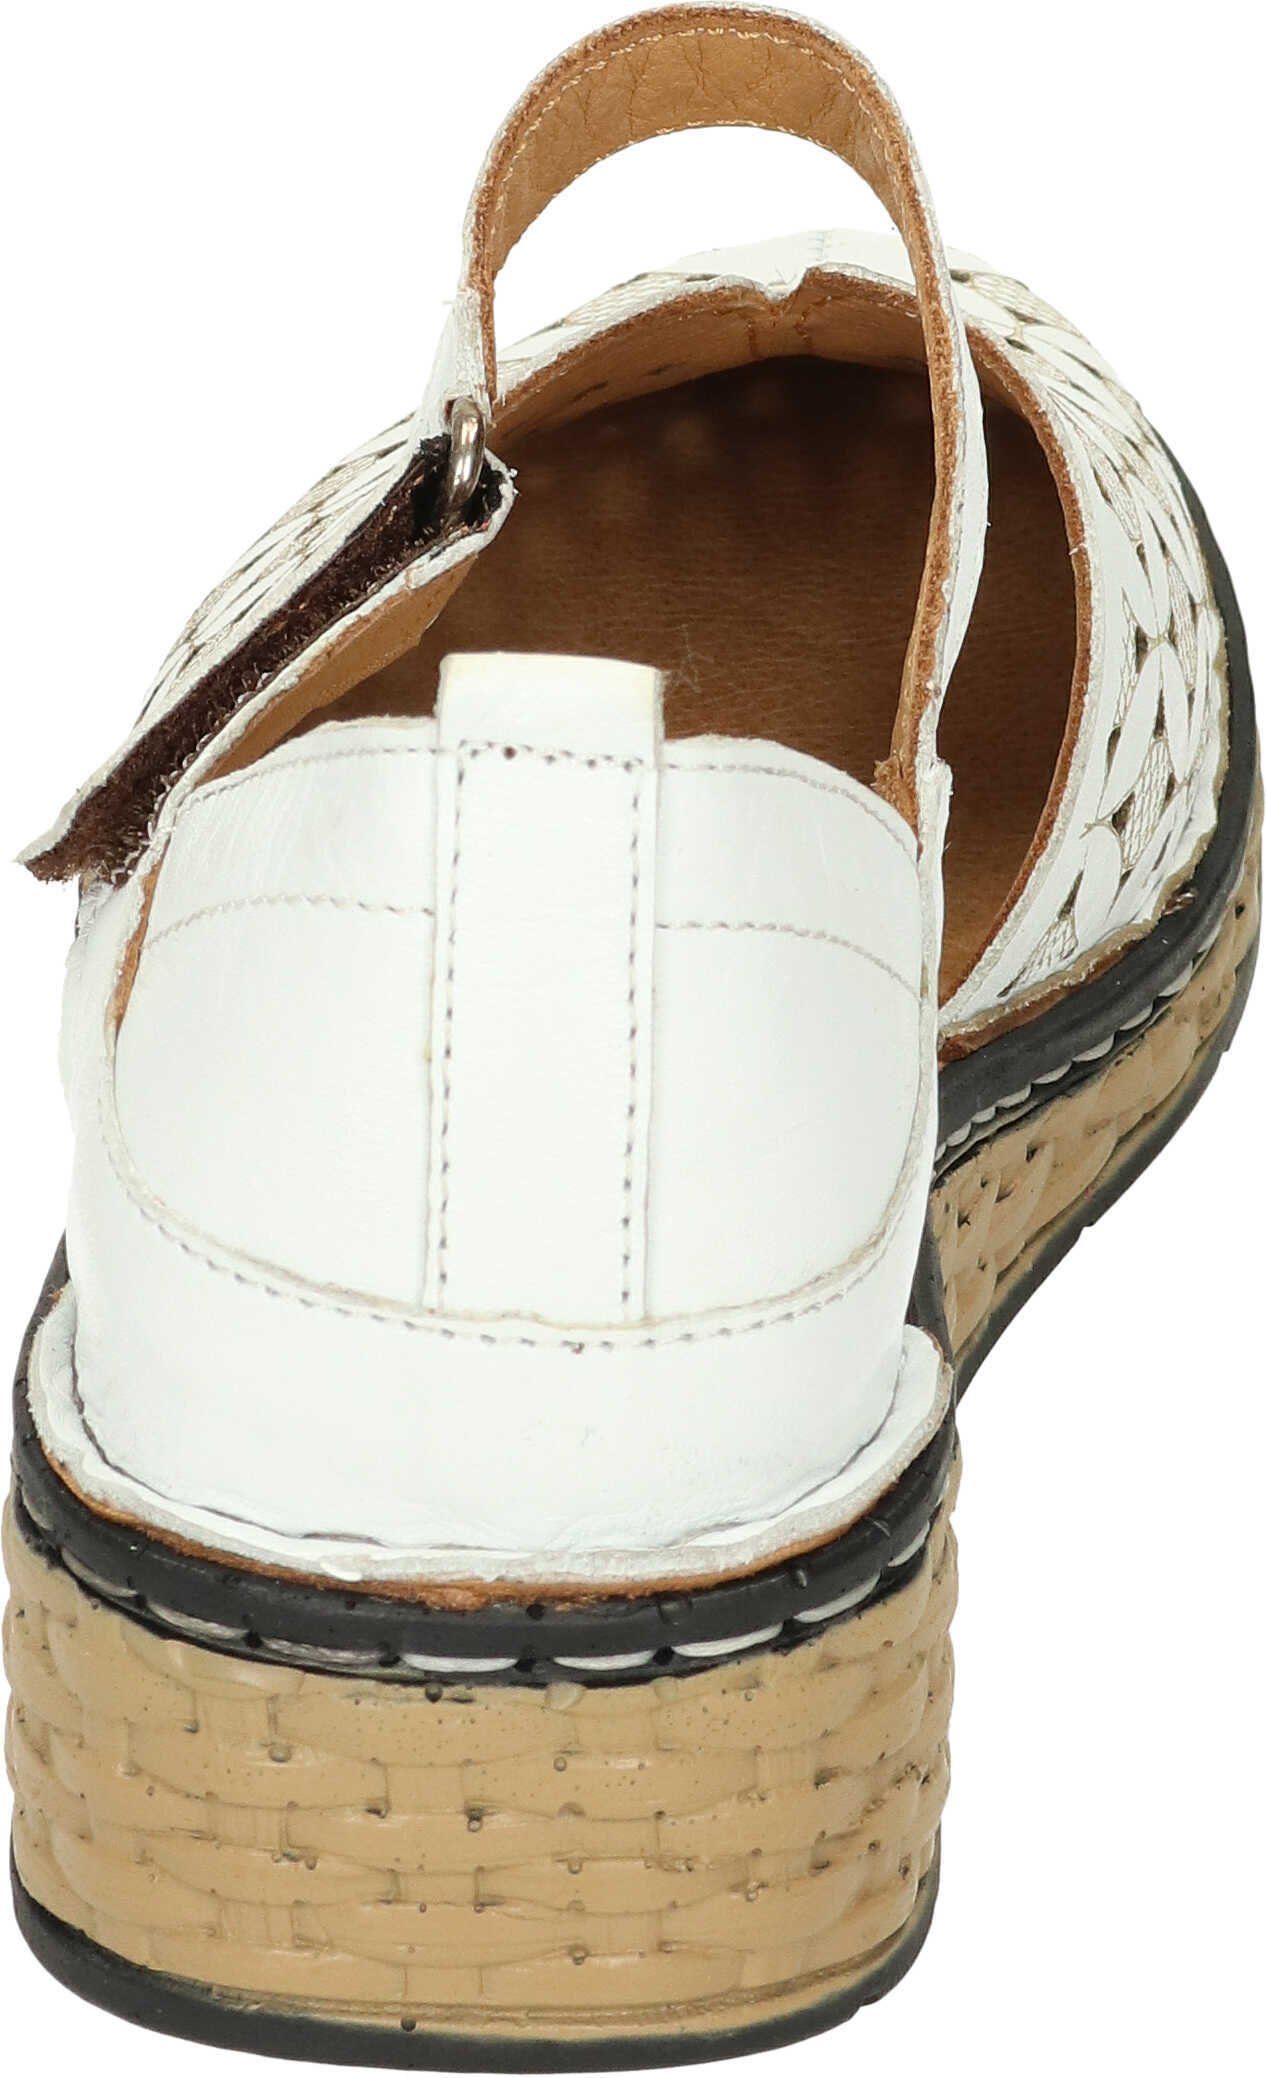 Sandaletten echtem aus weiß Leder Sandalette Manitu